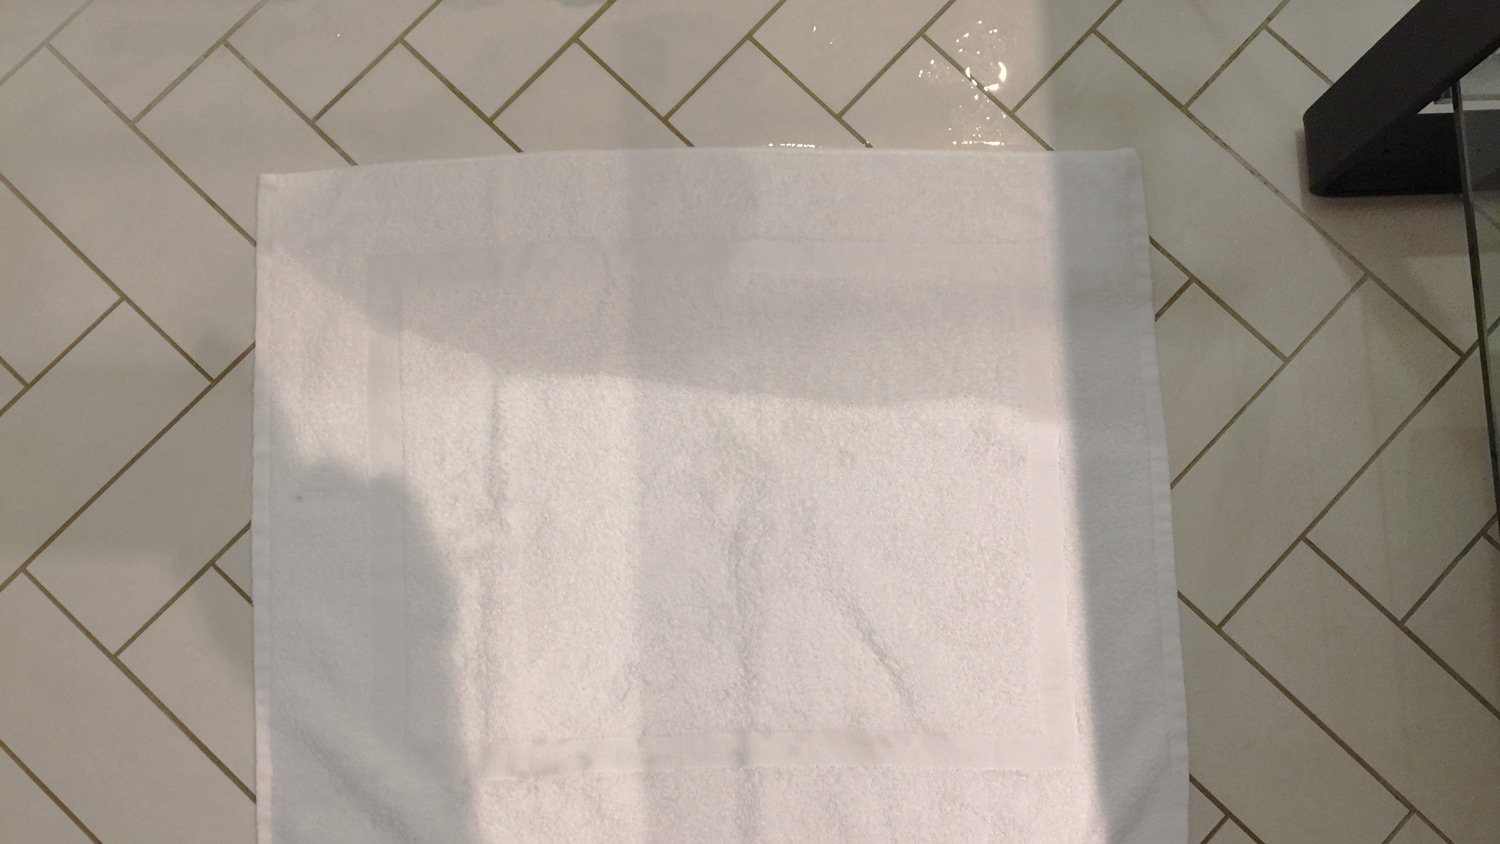 a white towel on a tile floor